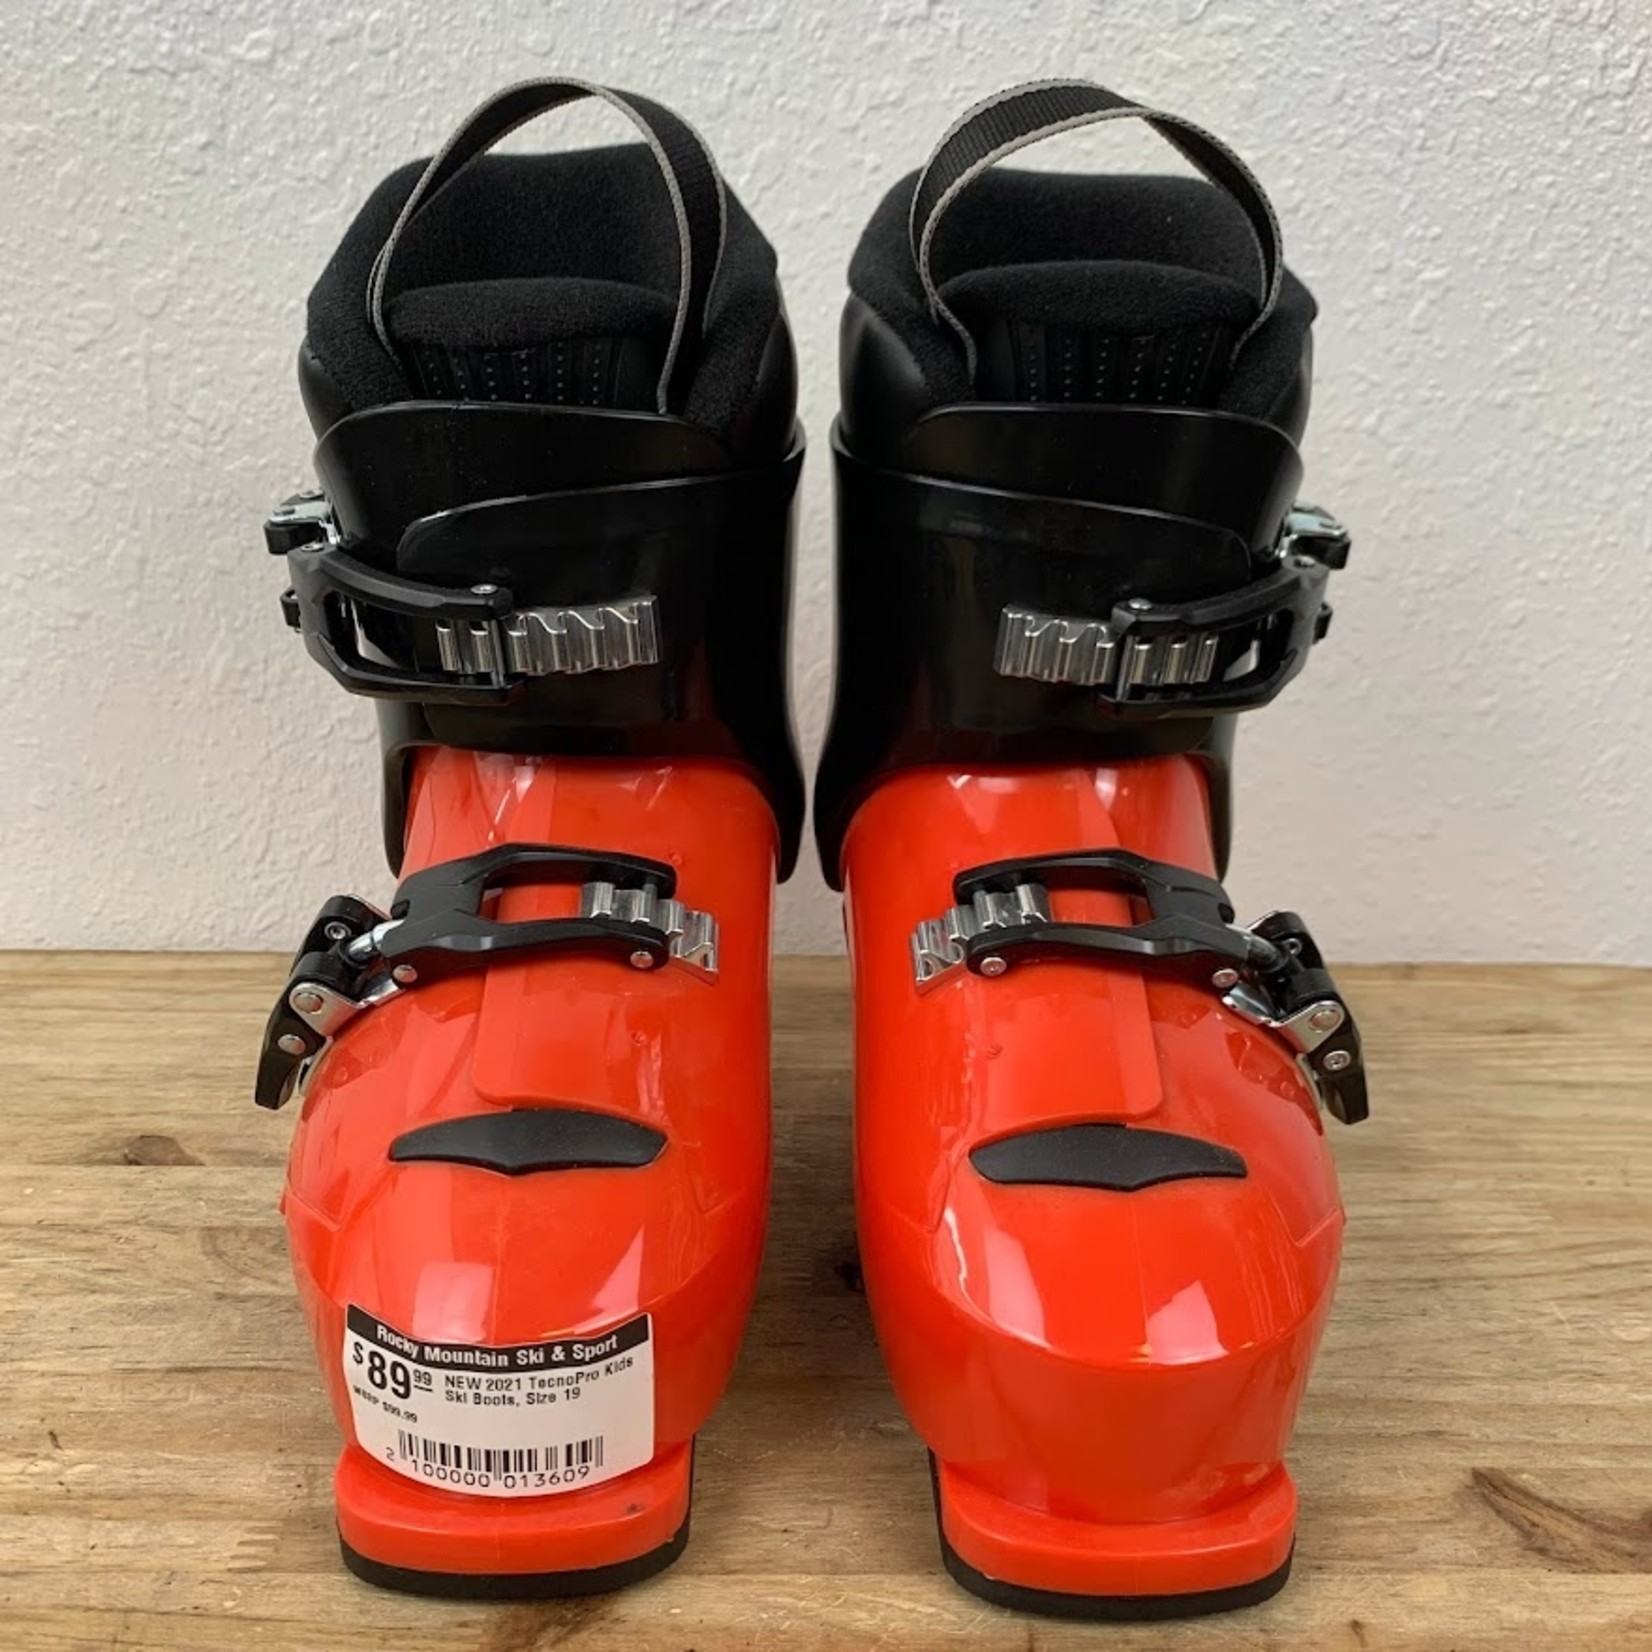 NEW 2021 TecnoPro Kids Ski Boots, Size 17